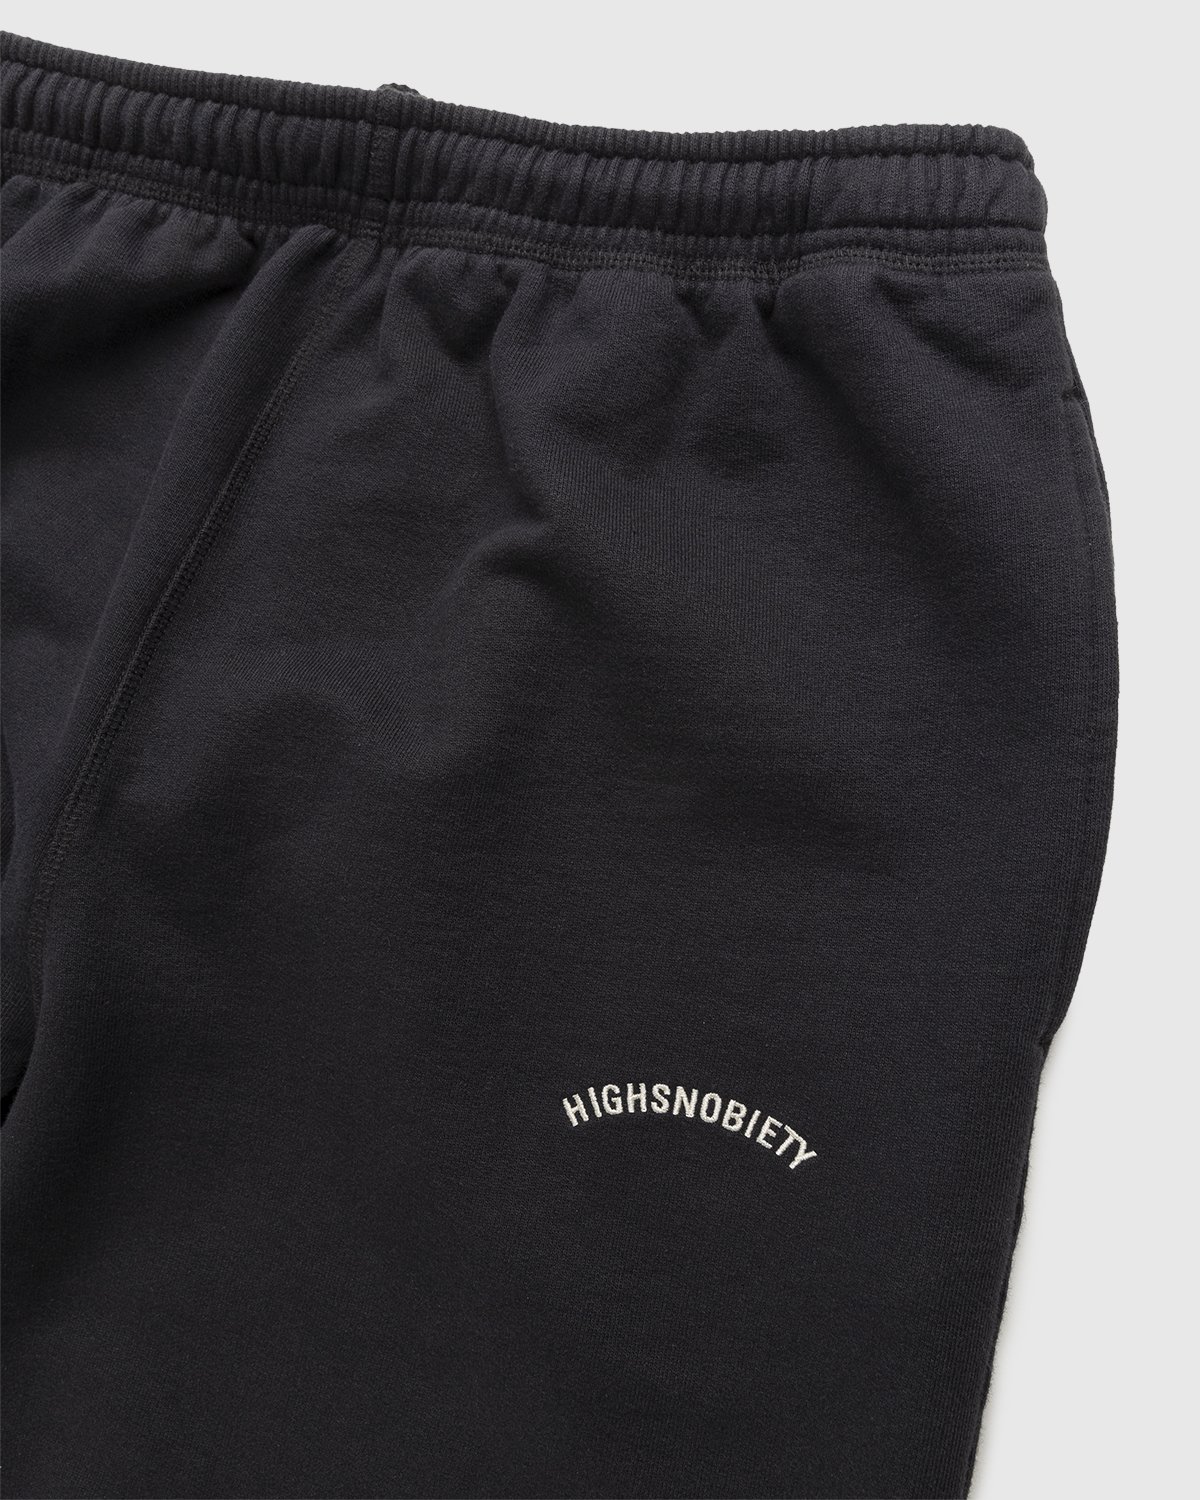 Highsnobiety - Logo Fleece Staples Pants Black - Clothing - Black - Image 4